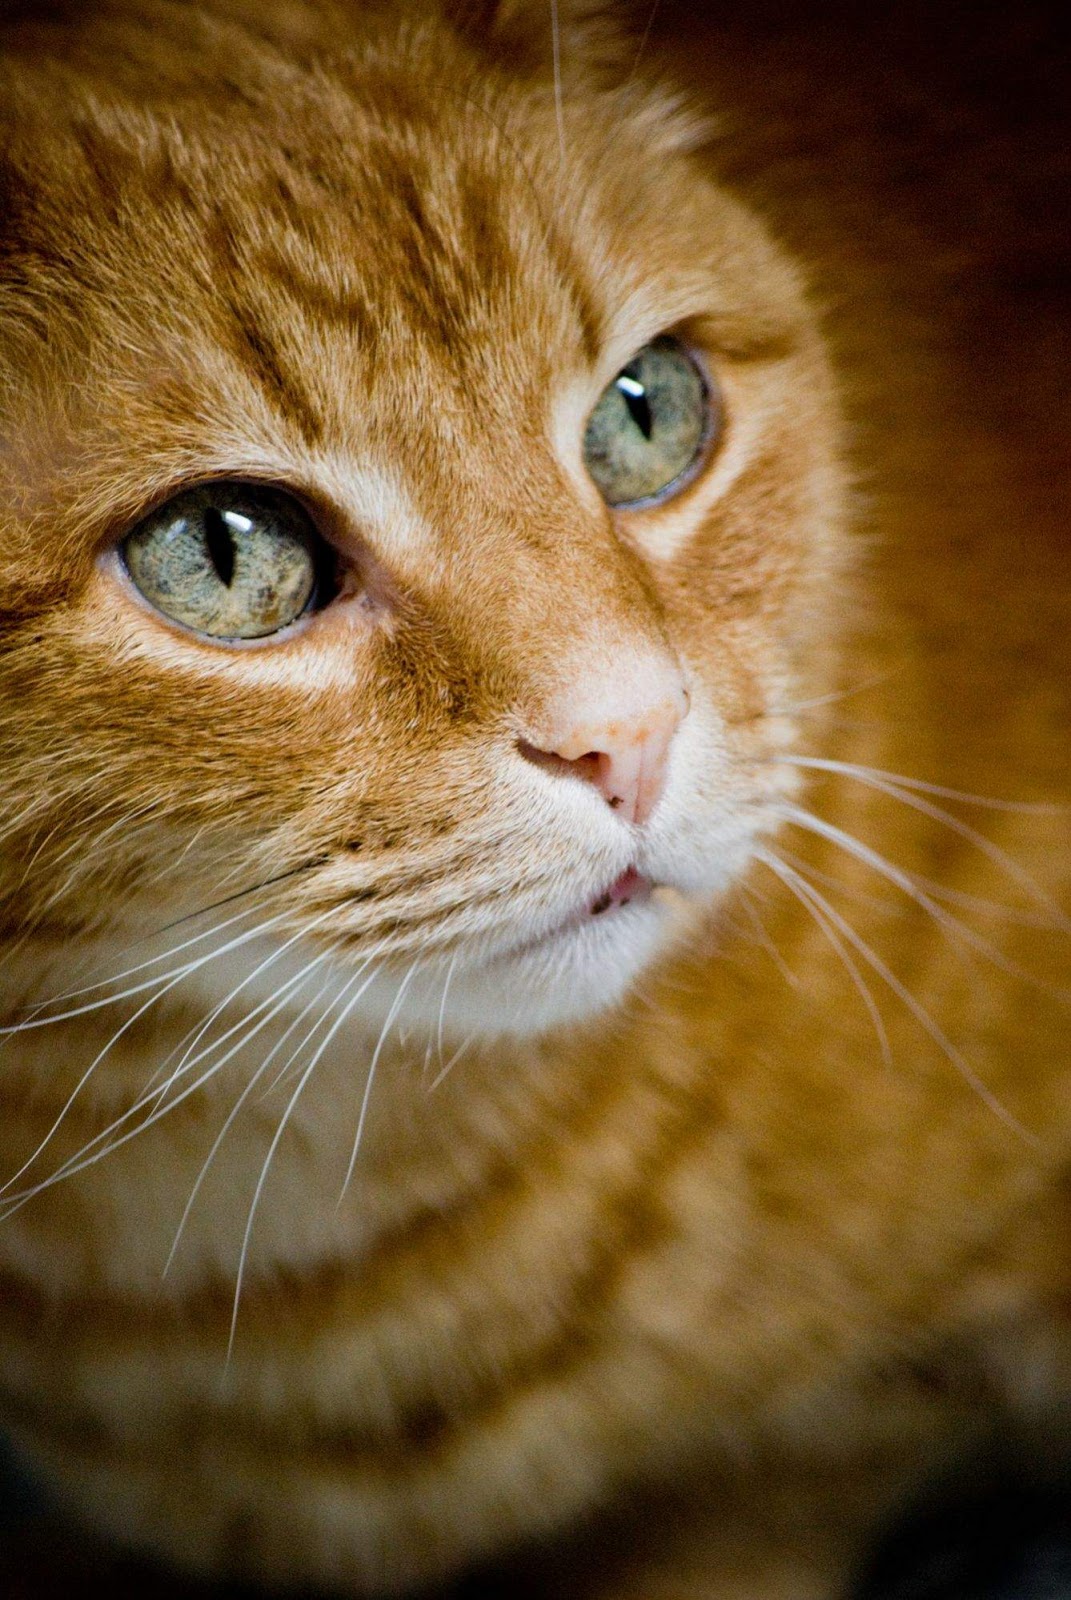 Funny cats - part 242, cute cat images, best cat photos